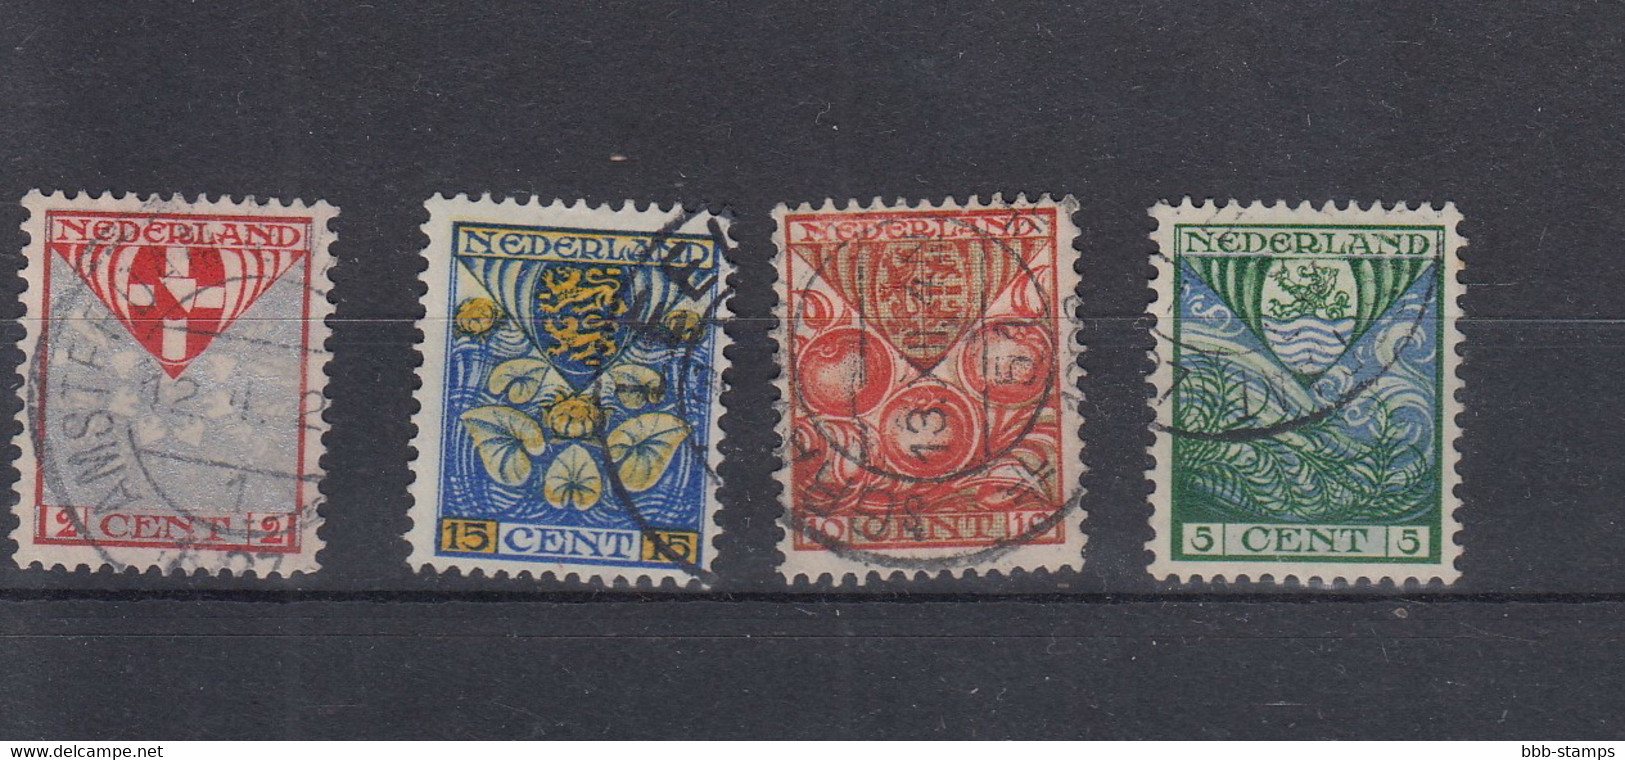 Niederlande Michel Cat.No. Used 192/195 (2) - Used Stamps